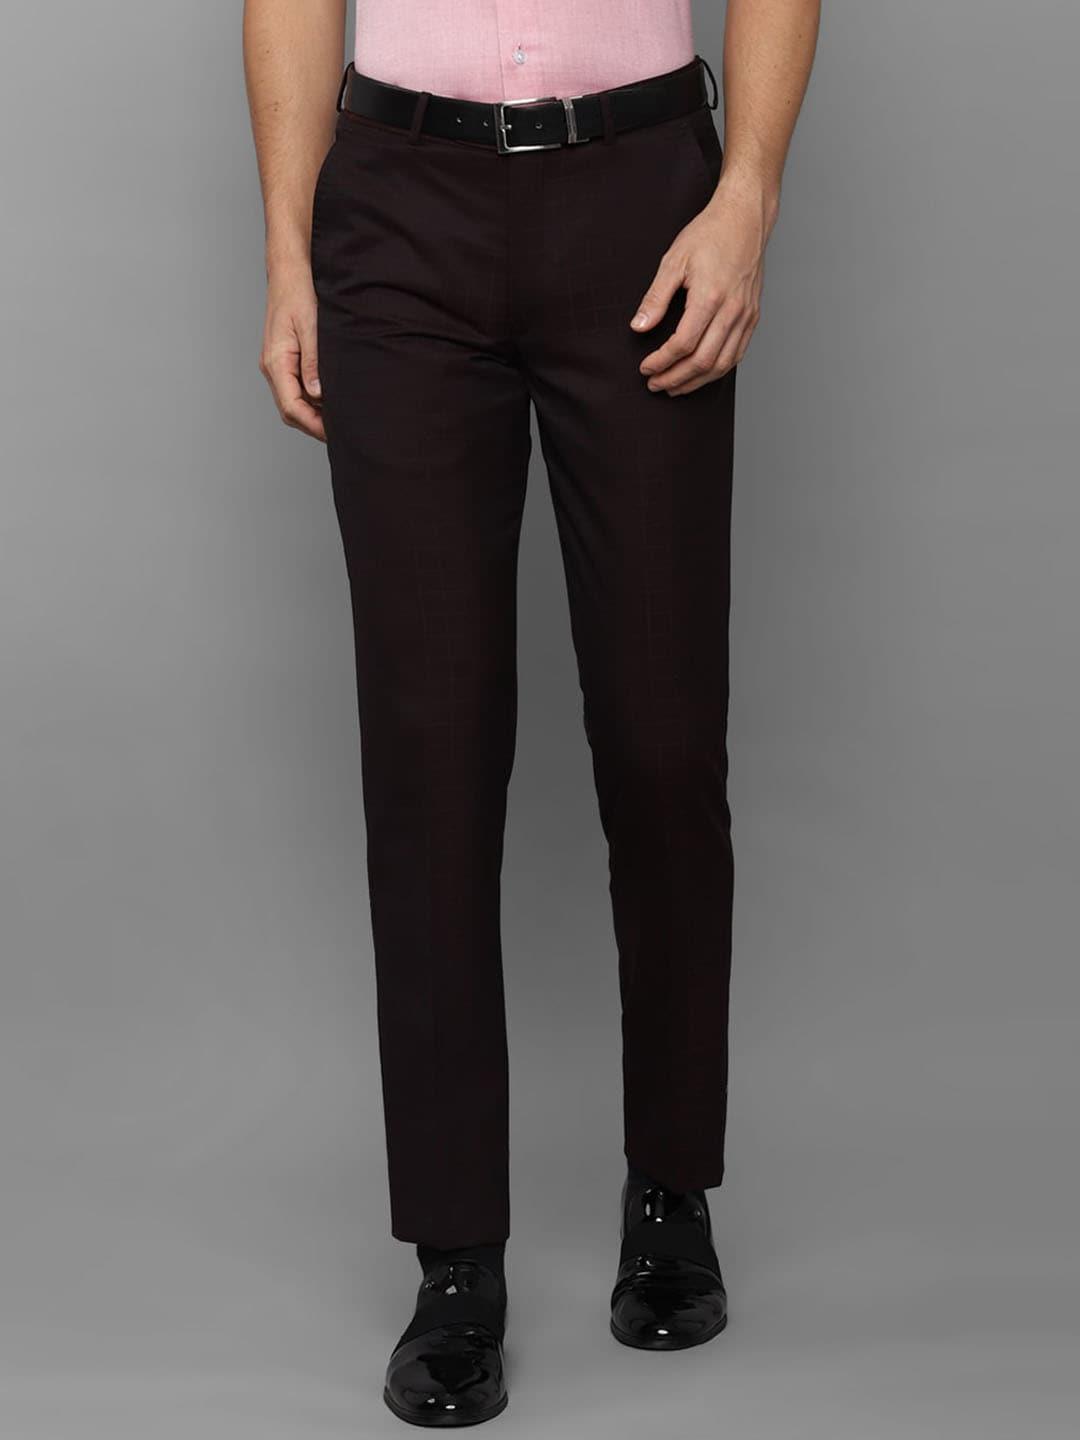 louis-philippe-men-brown-slim-fit-trousers